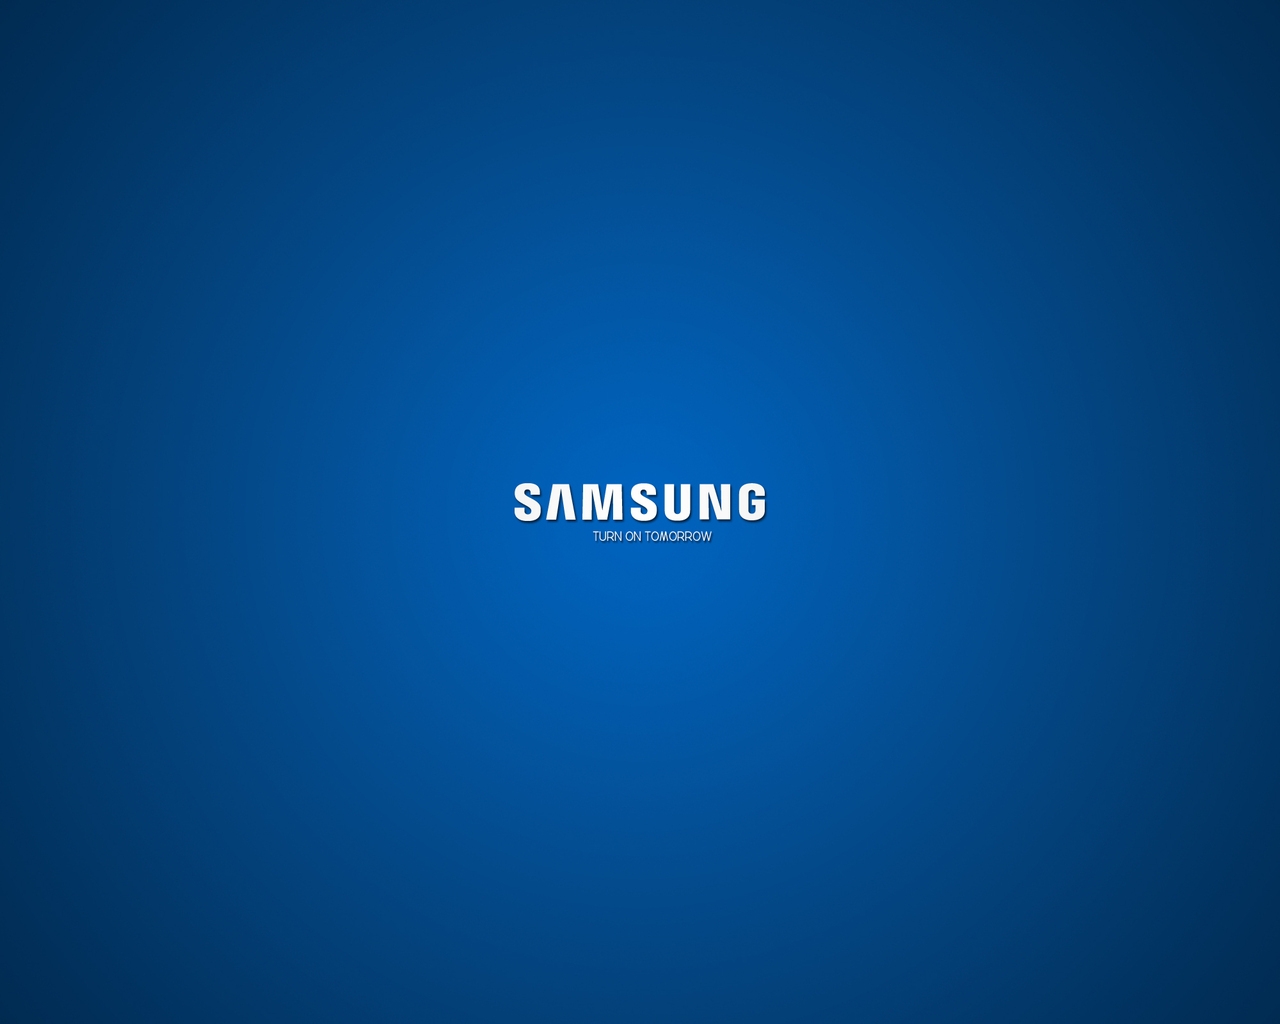 Samsung for 1280 x 1024 resolution